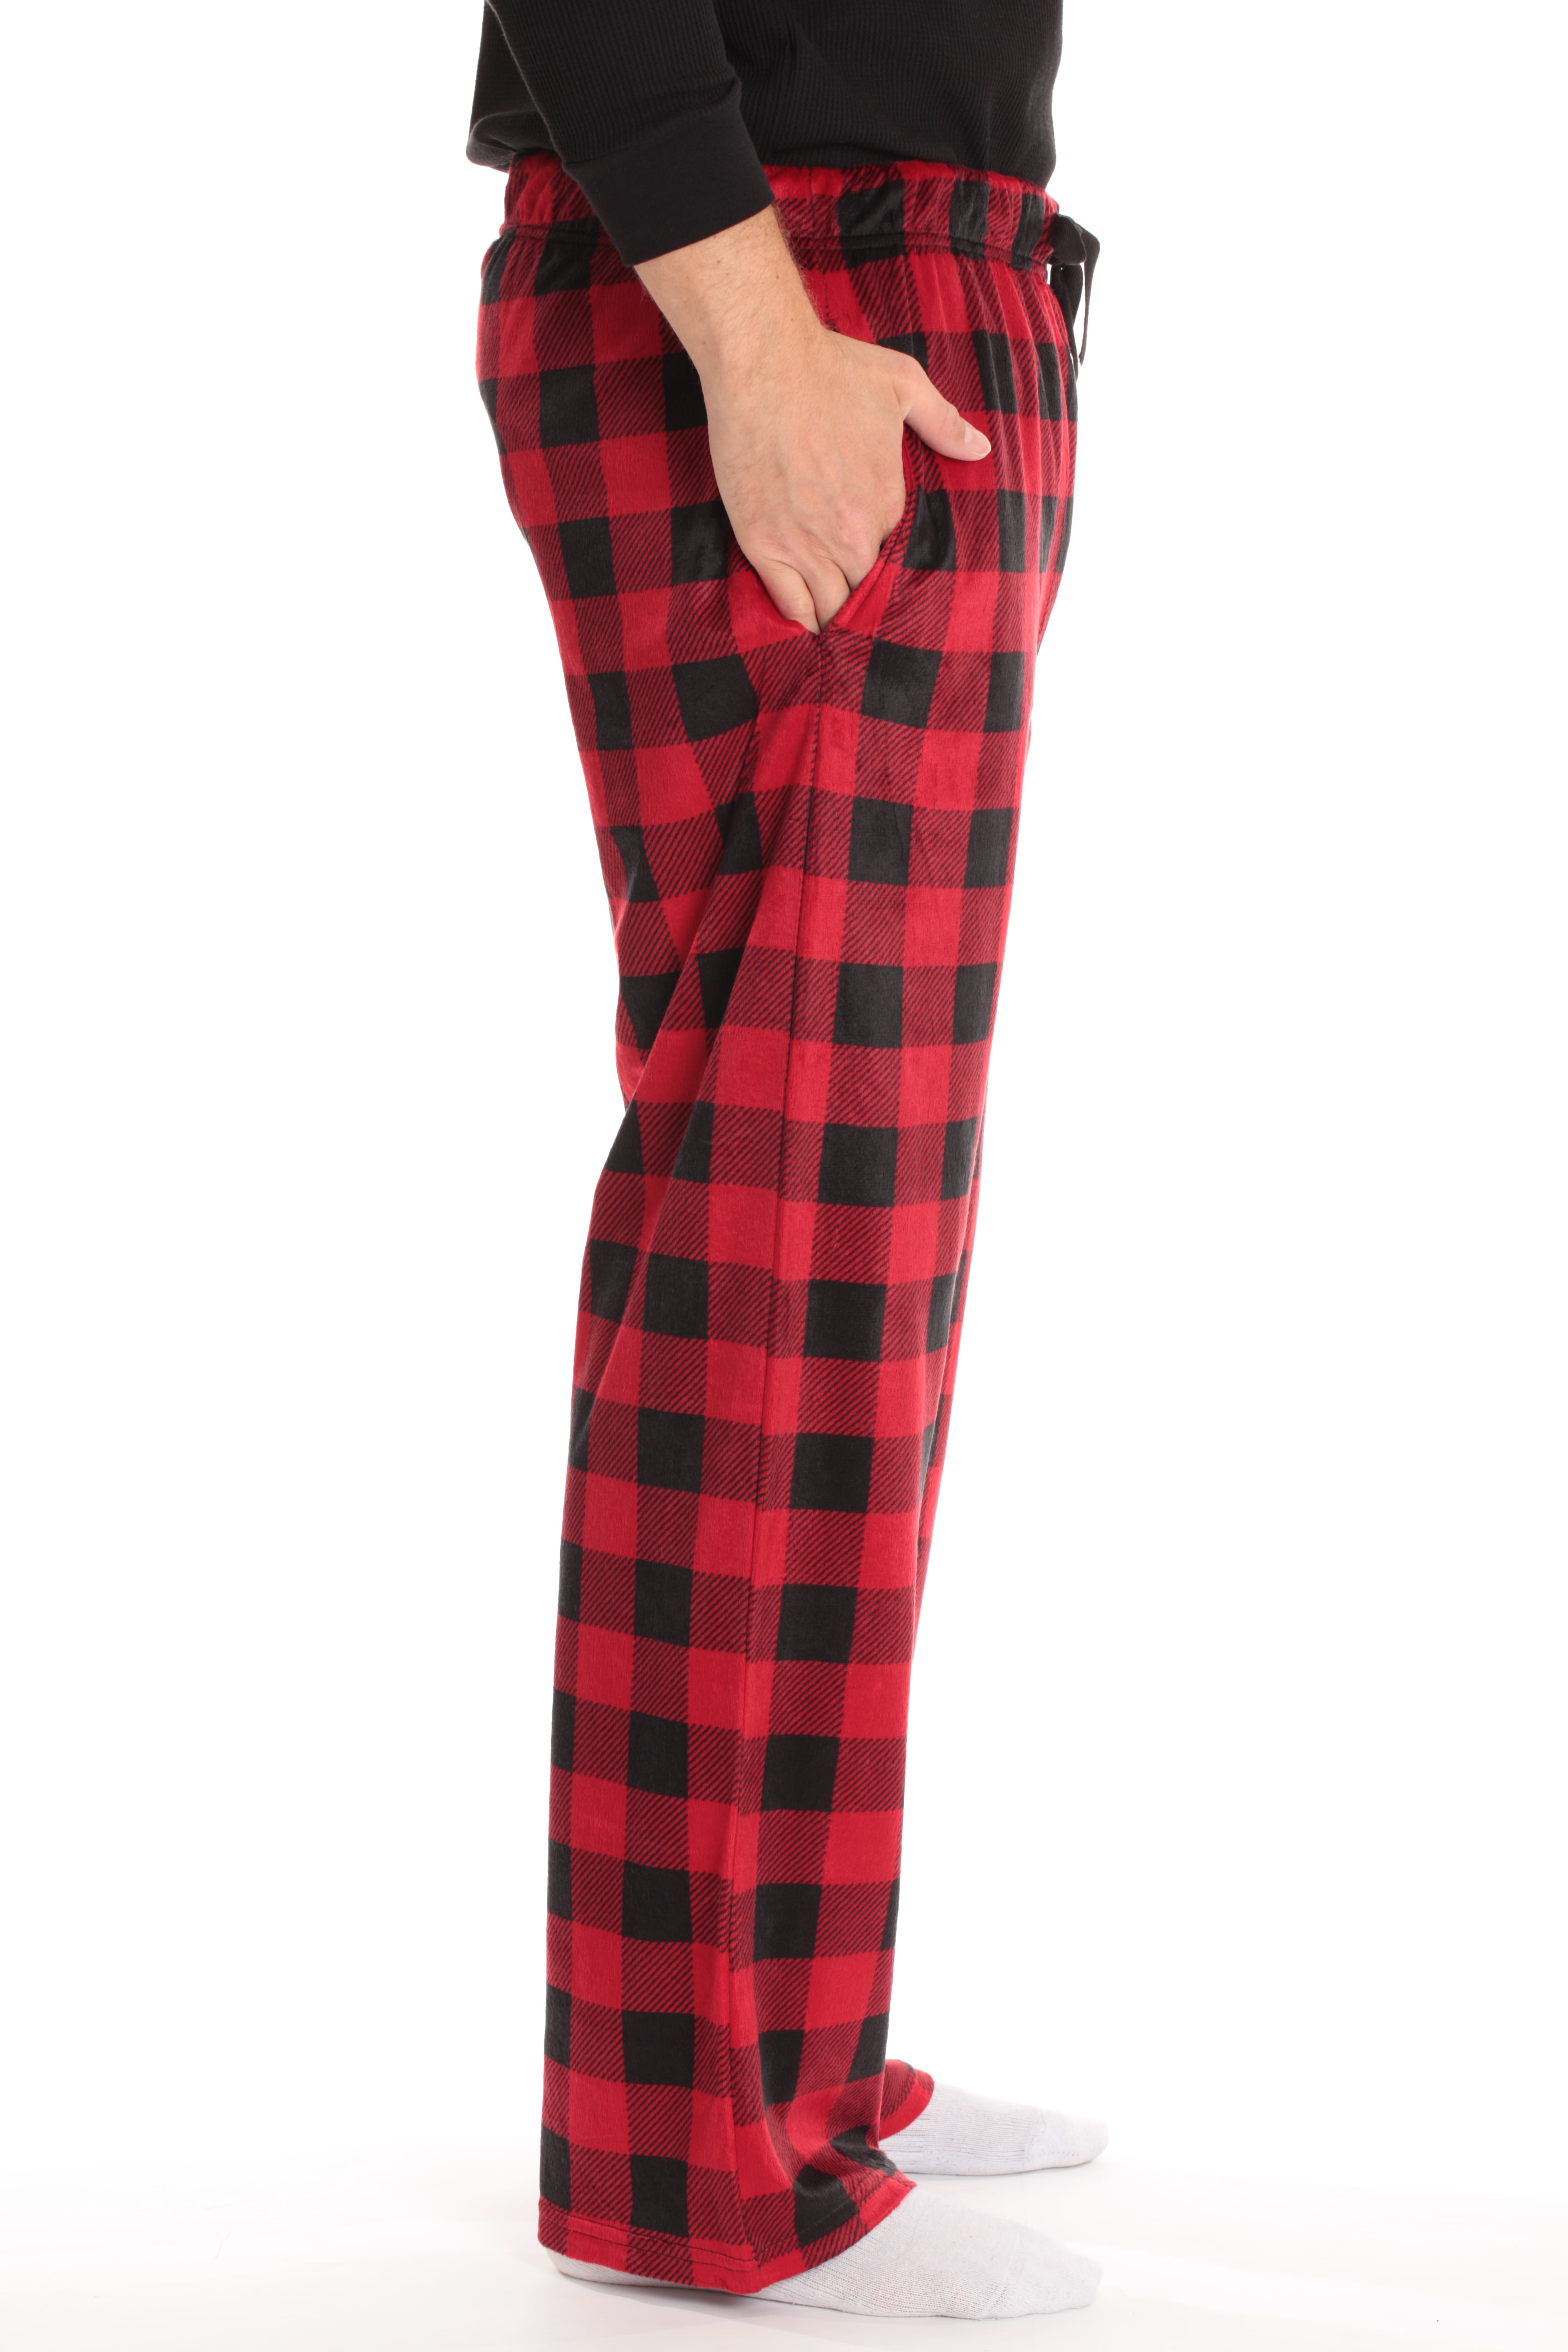 AT LOFT Buffalo Plaid Pajama Top & Pant SET ~ Red & Black ~ Sz Medium ~ NWT